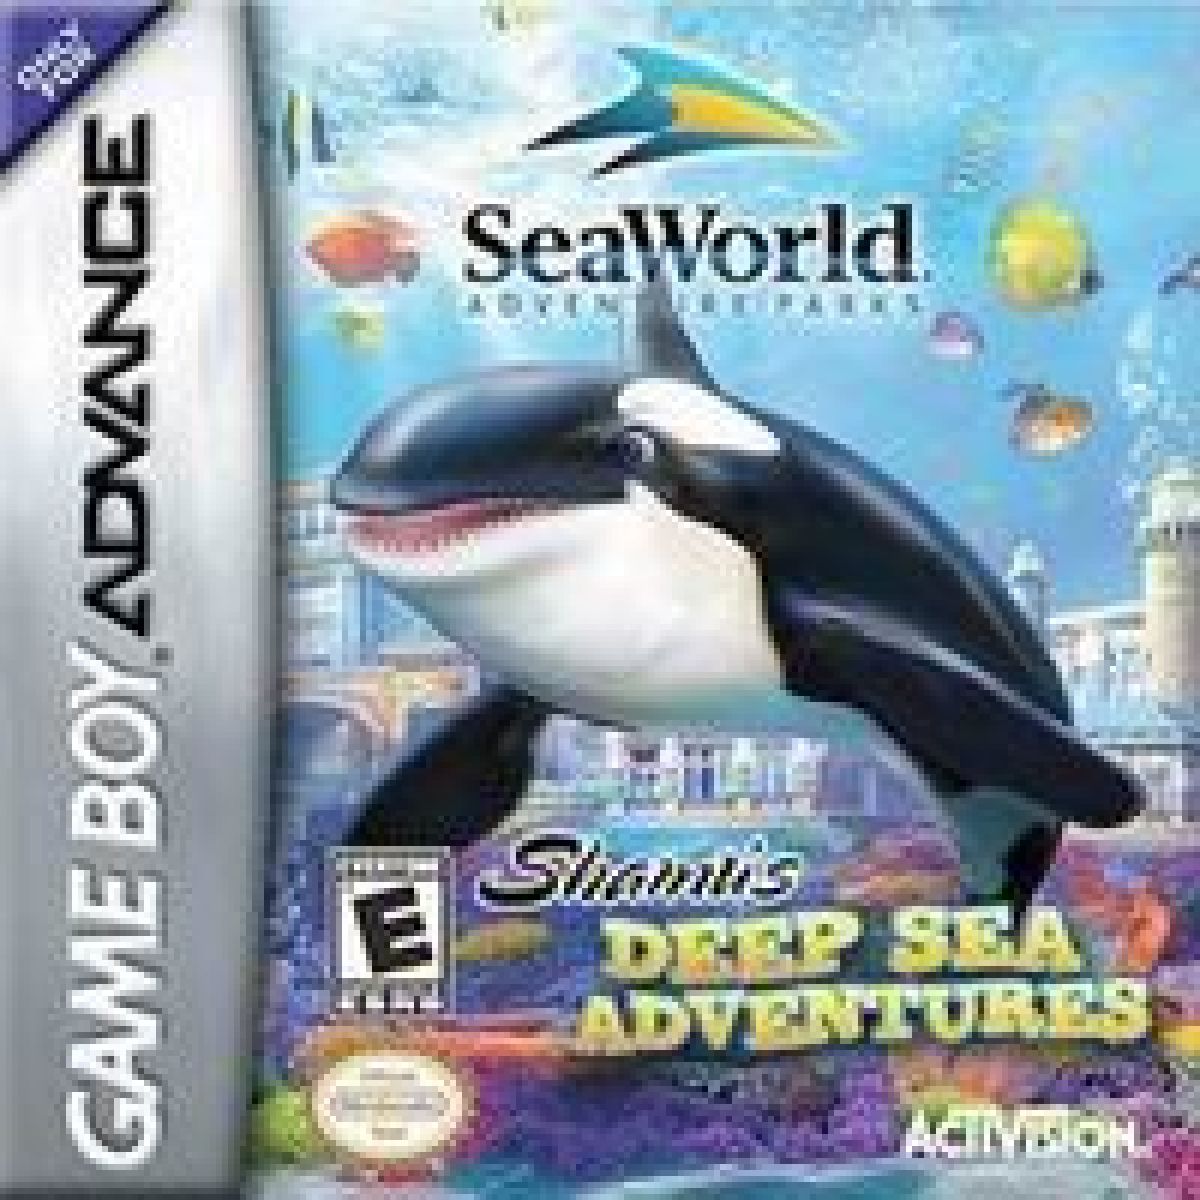 Seaworld: Shamu's Deep Sea Adventure